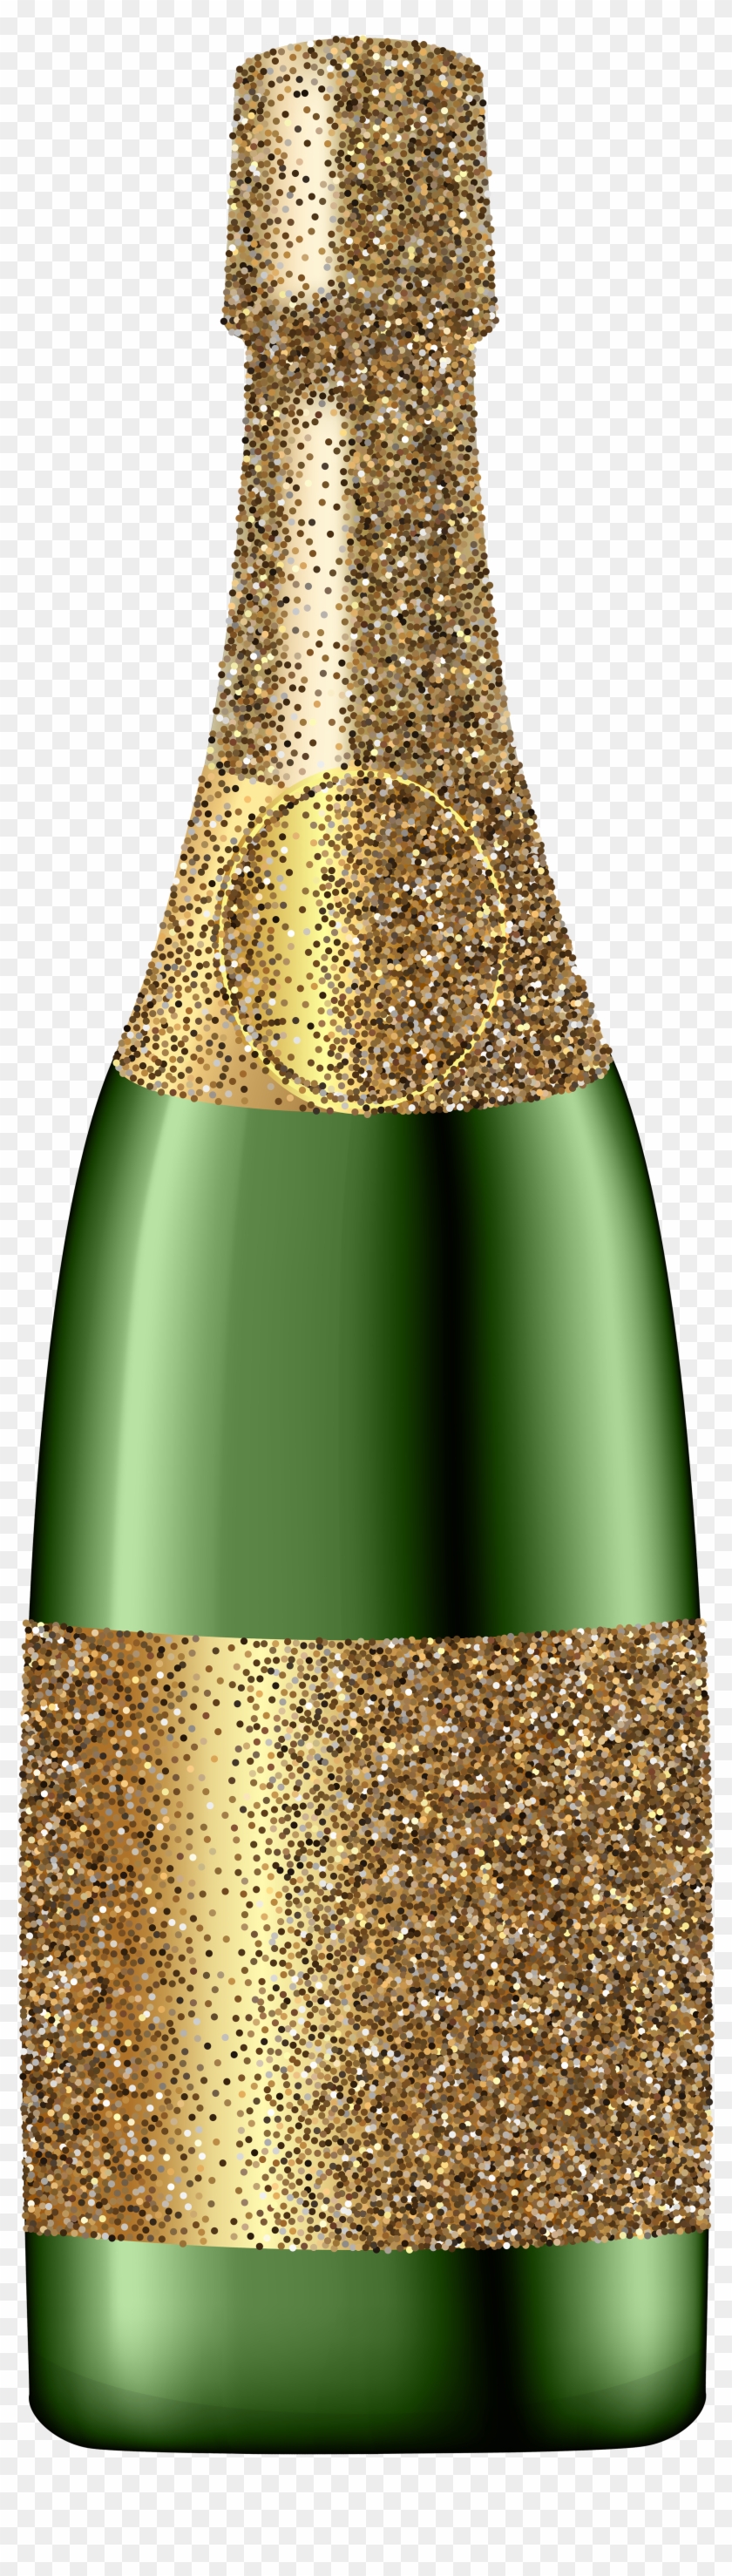 Glitter Champagne Bottle Png Clip Art Image - Champagne Bottle Clip Art #532541